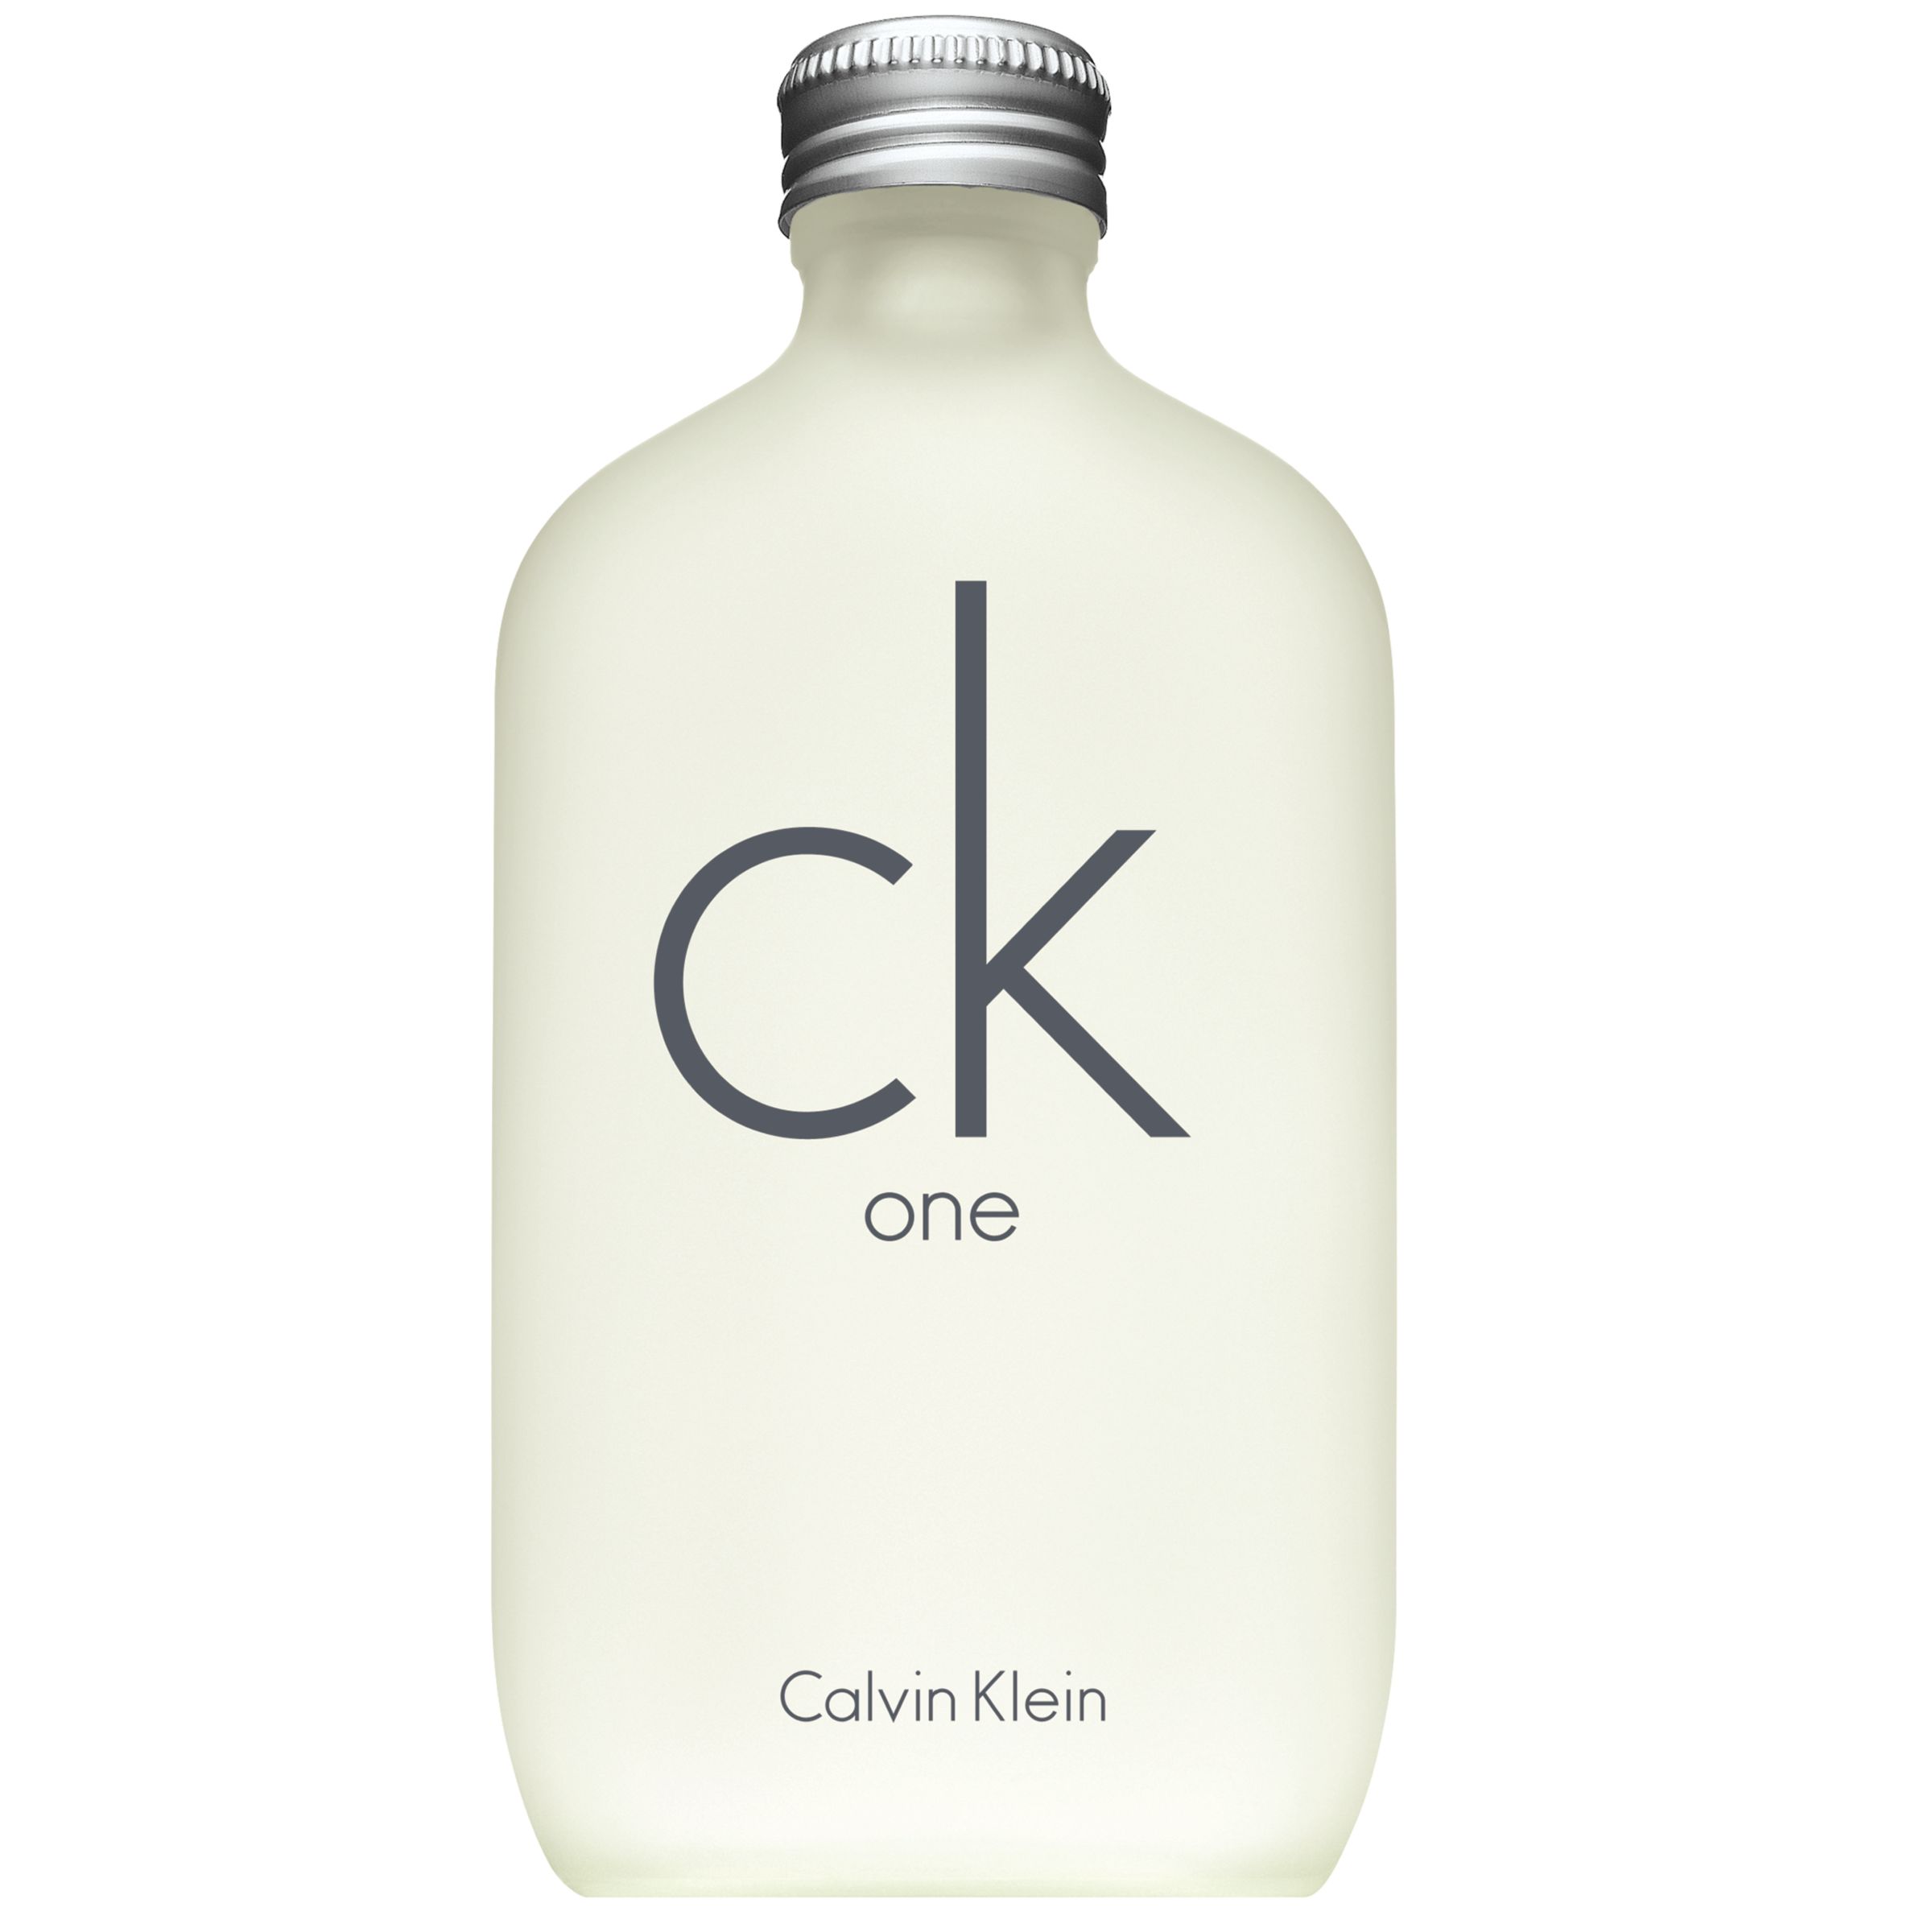 ck1 perfume price